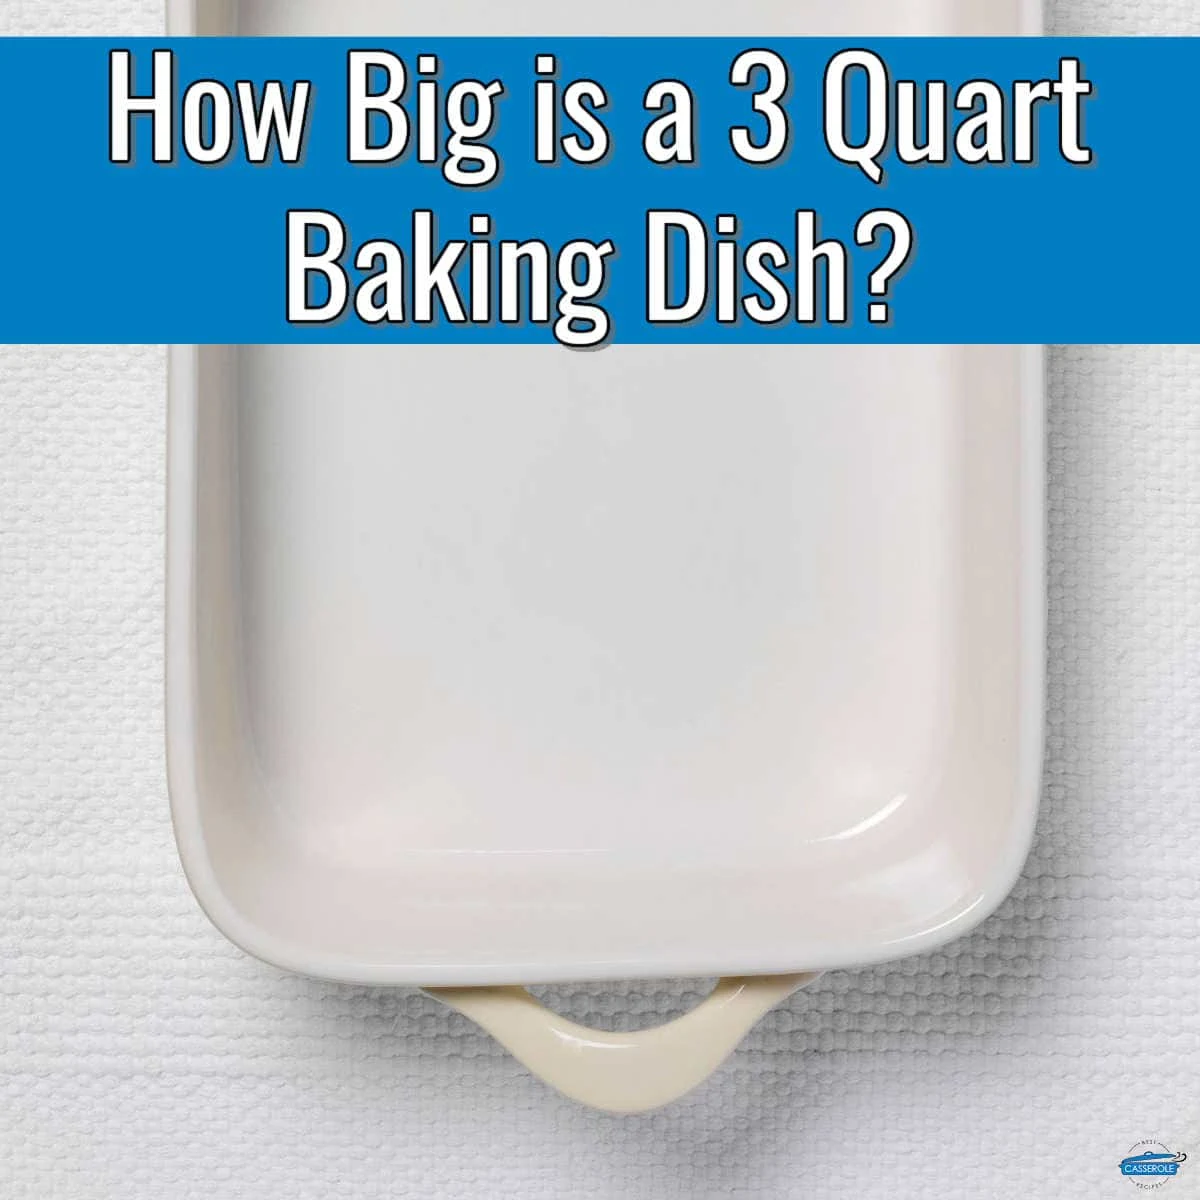 https://bestcasserolerecipes.com/wp-content/uploads/2022/11/How-big-is-a-3-quart-baking-dish_-Featured-Image.jpg.webp